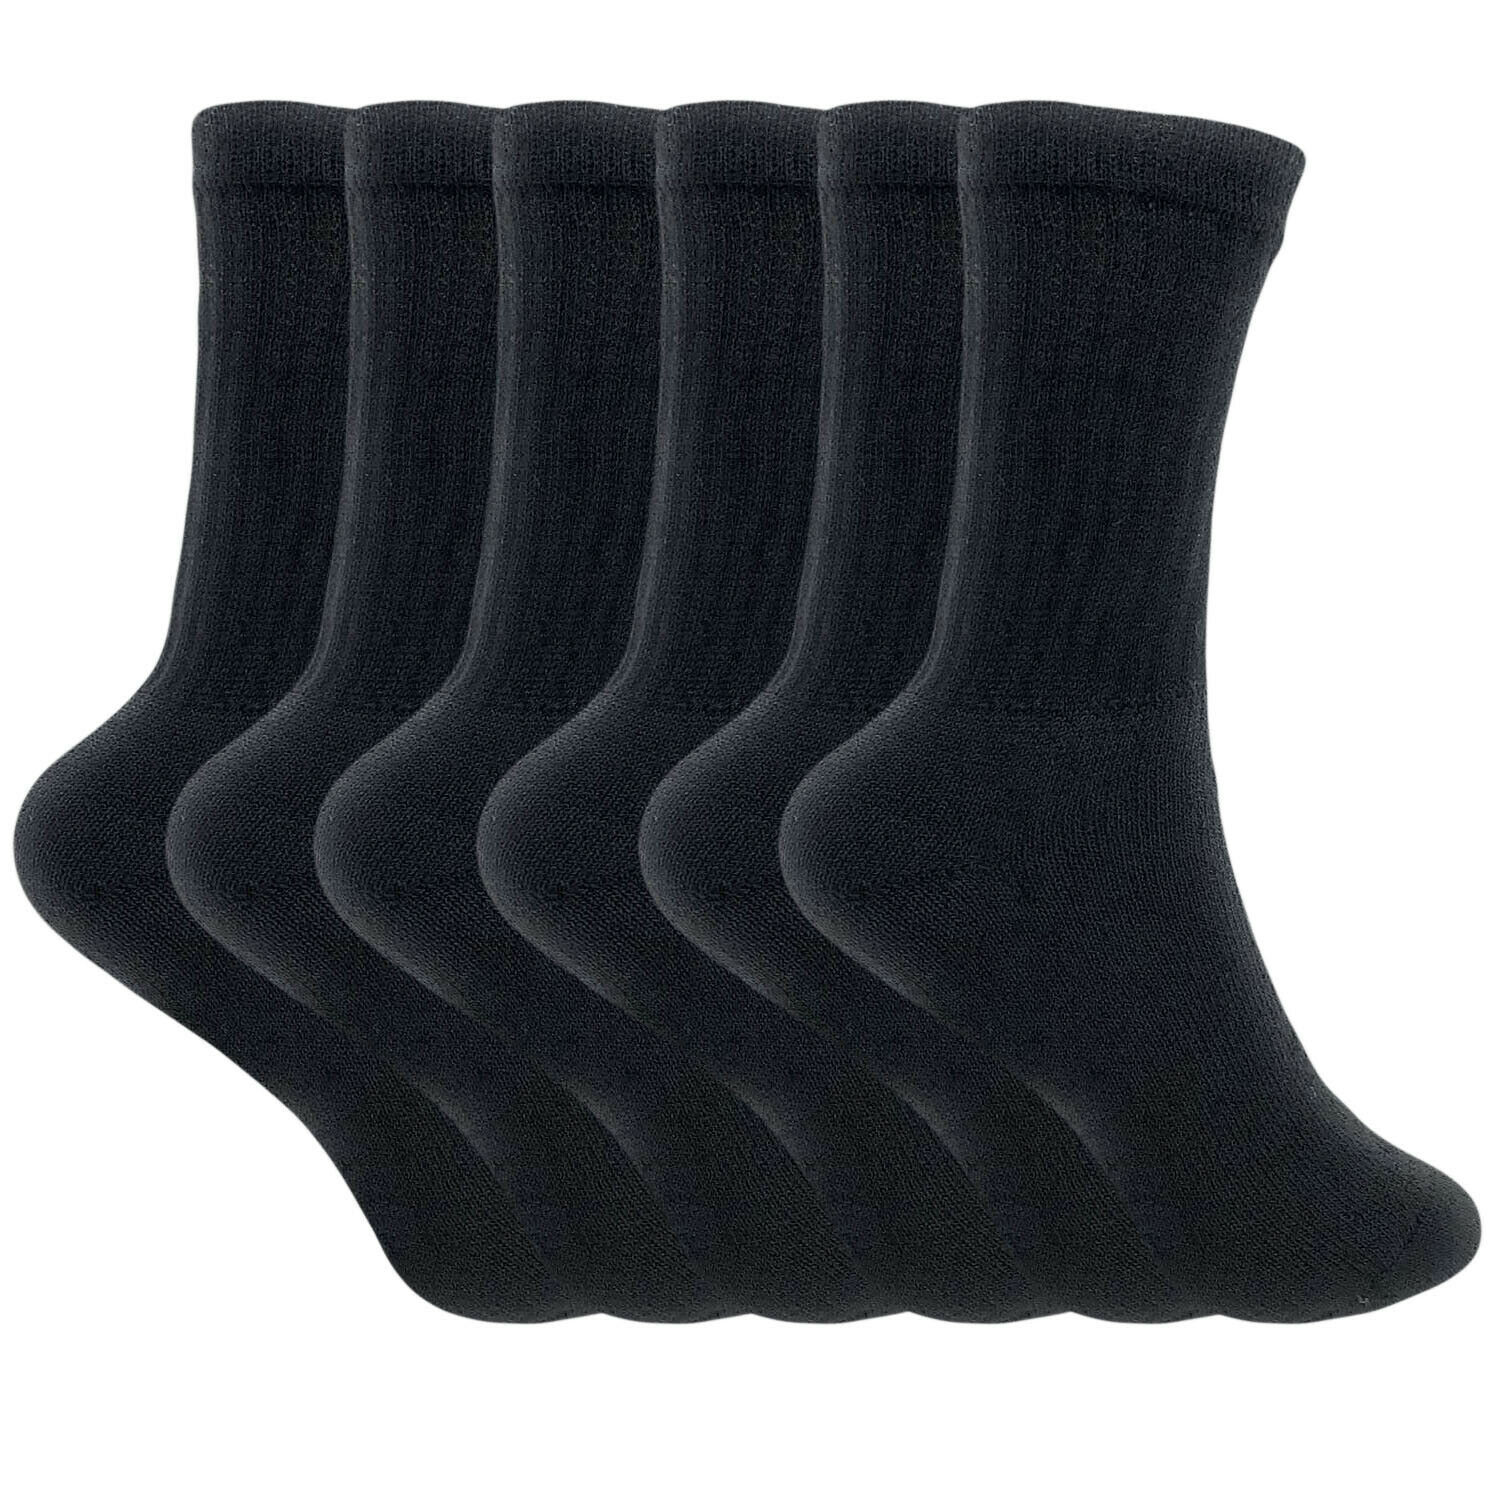 Cotton Crew Socks for Women 6 PAIRS Smooth Toe Seam Socks